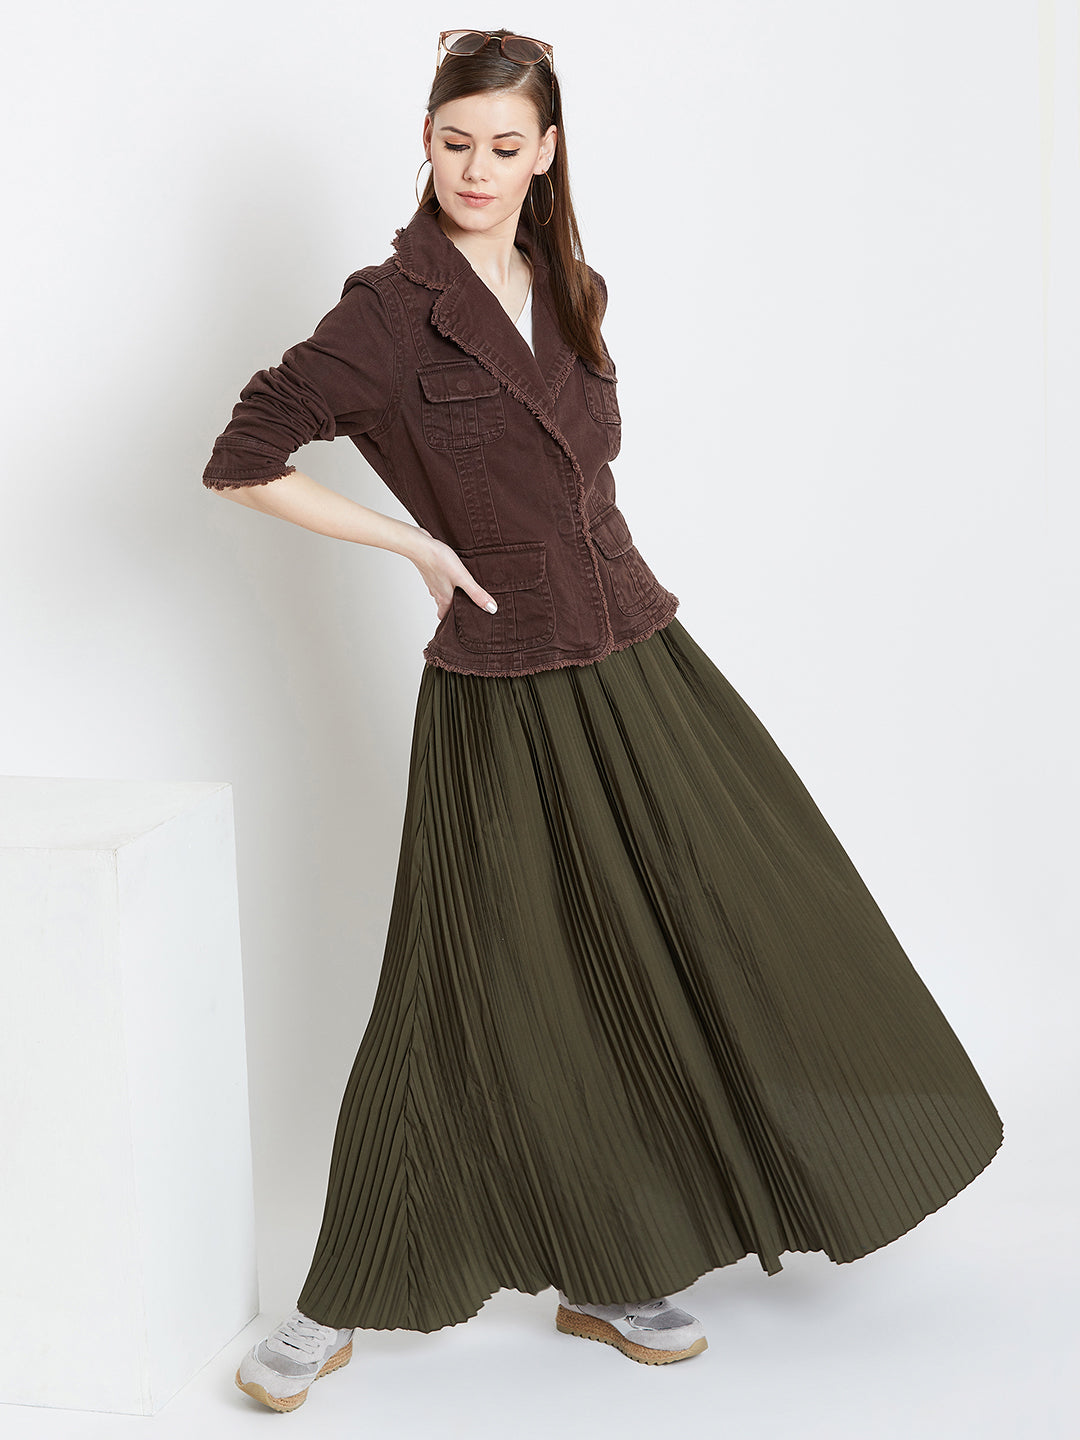 Berrylush Women Solid Olive Green Flared Maxi Skirt